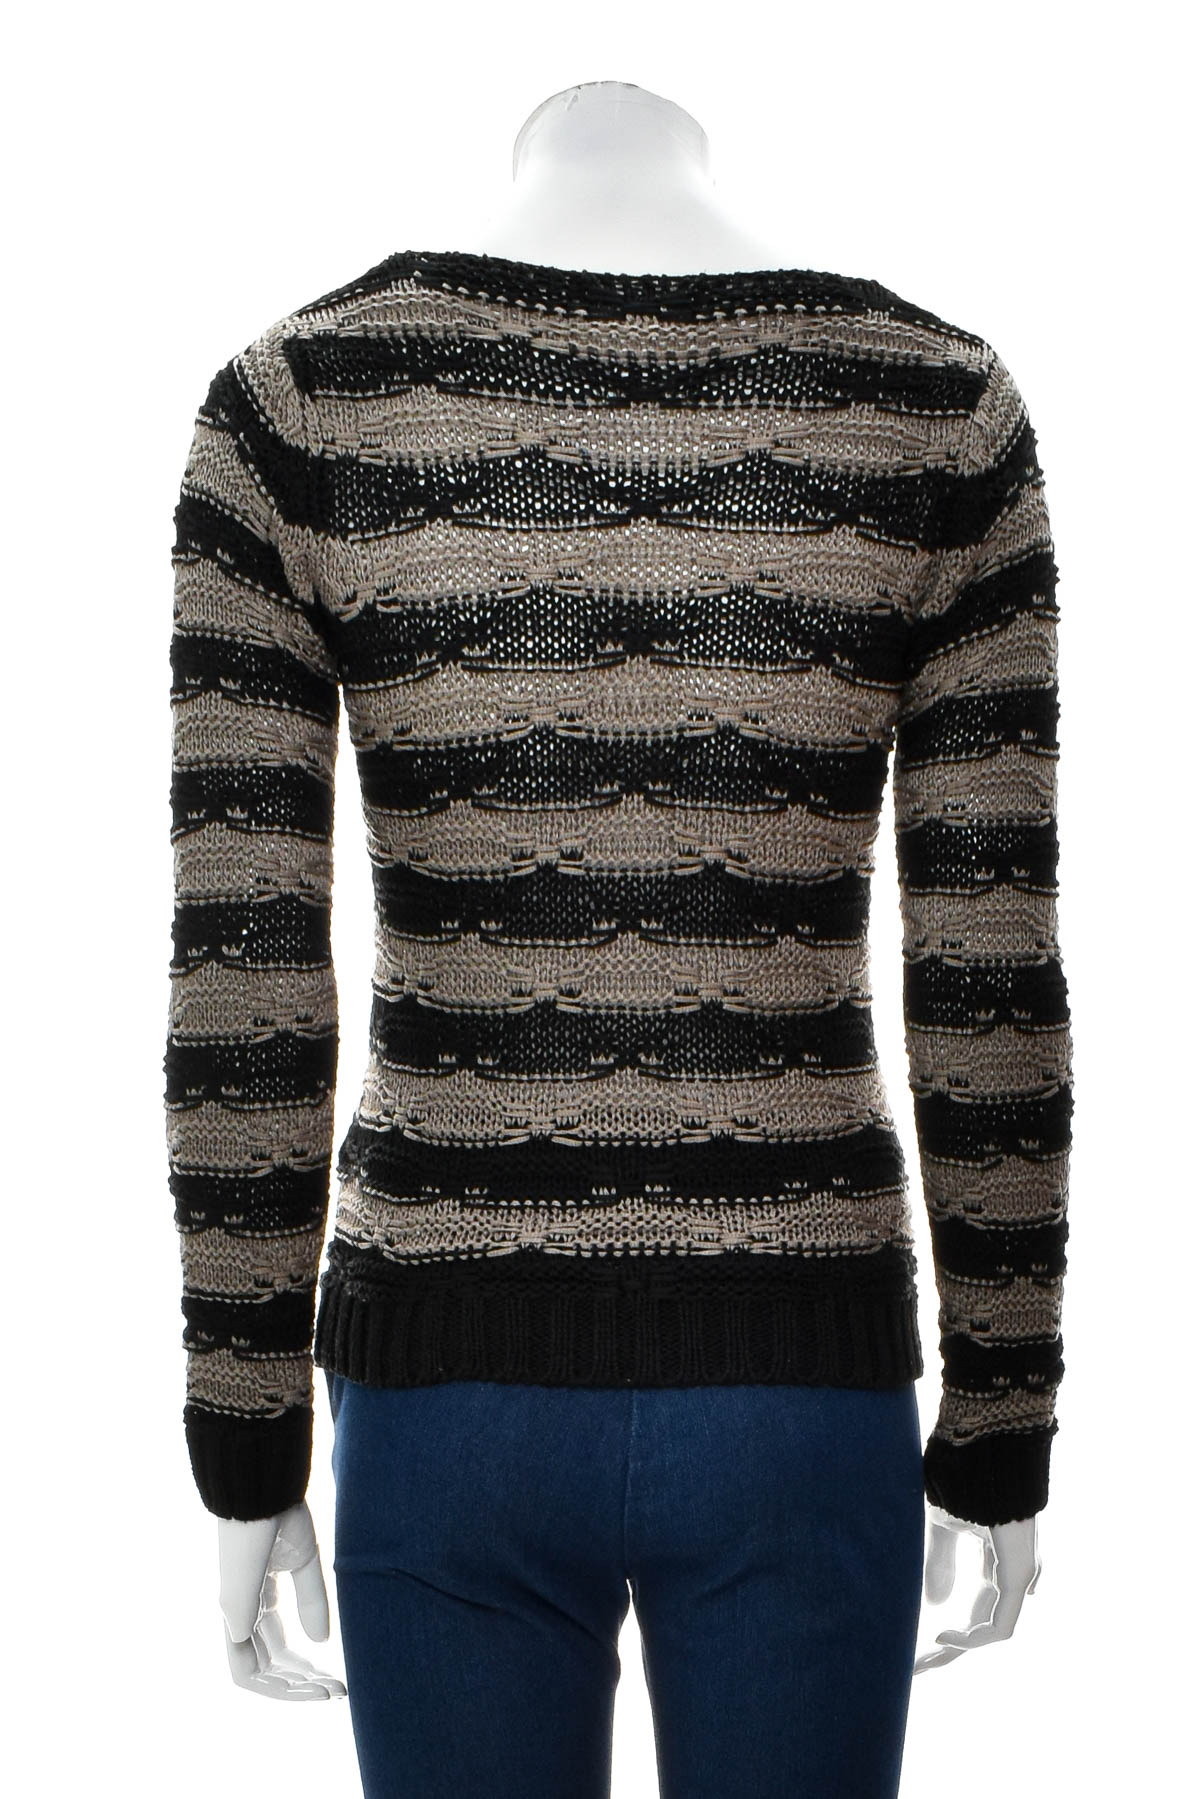 Women's sweater - Zabaione - 1